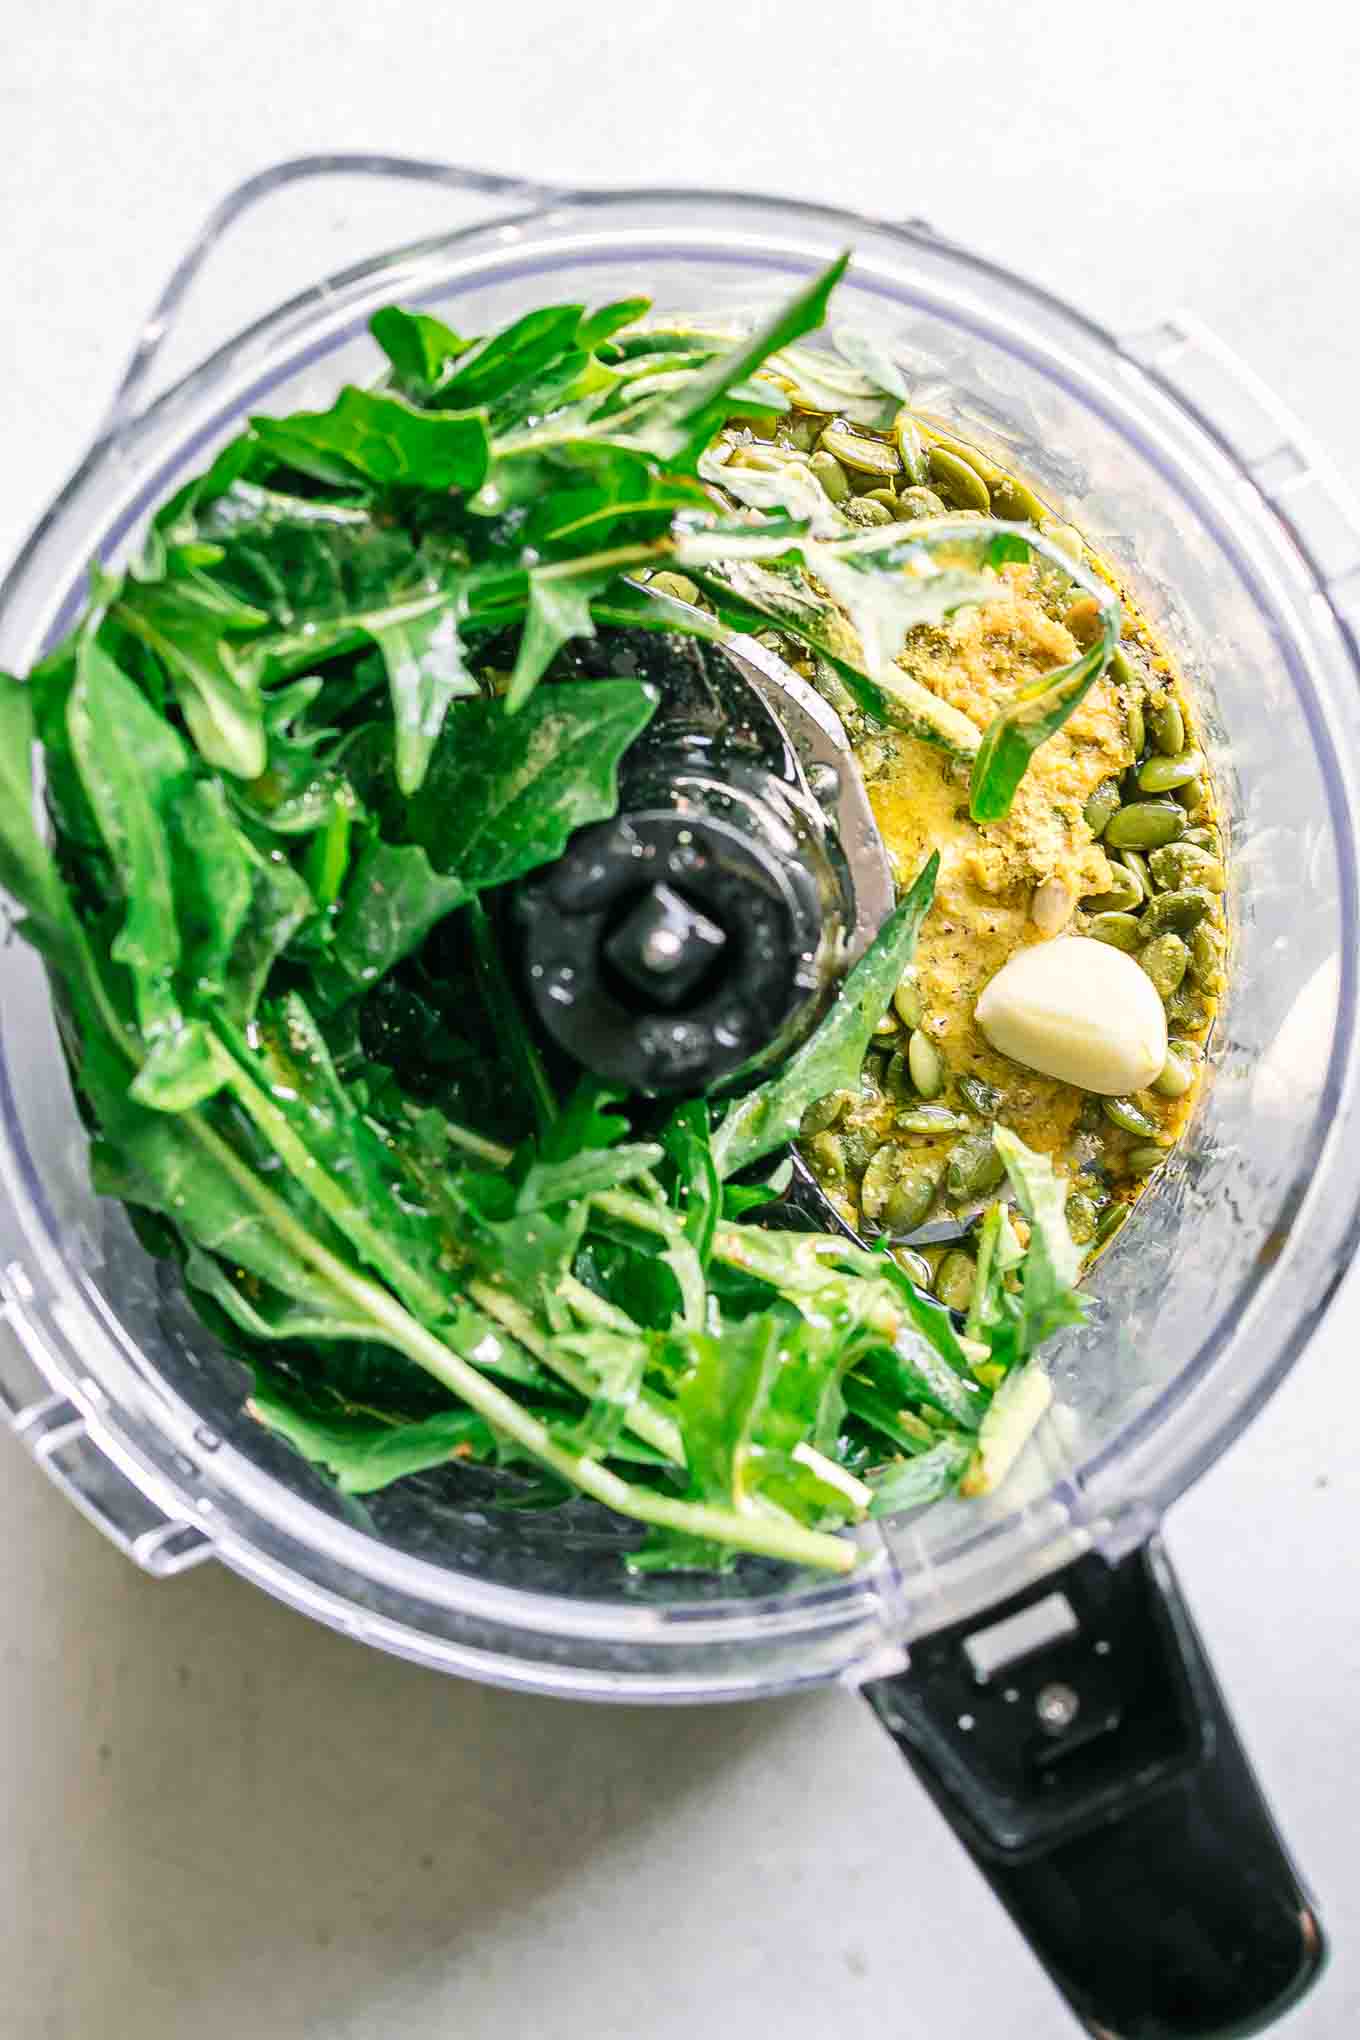 dandelion greens inside a food processor with pesto ingredients